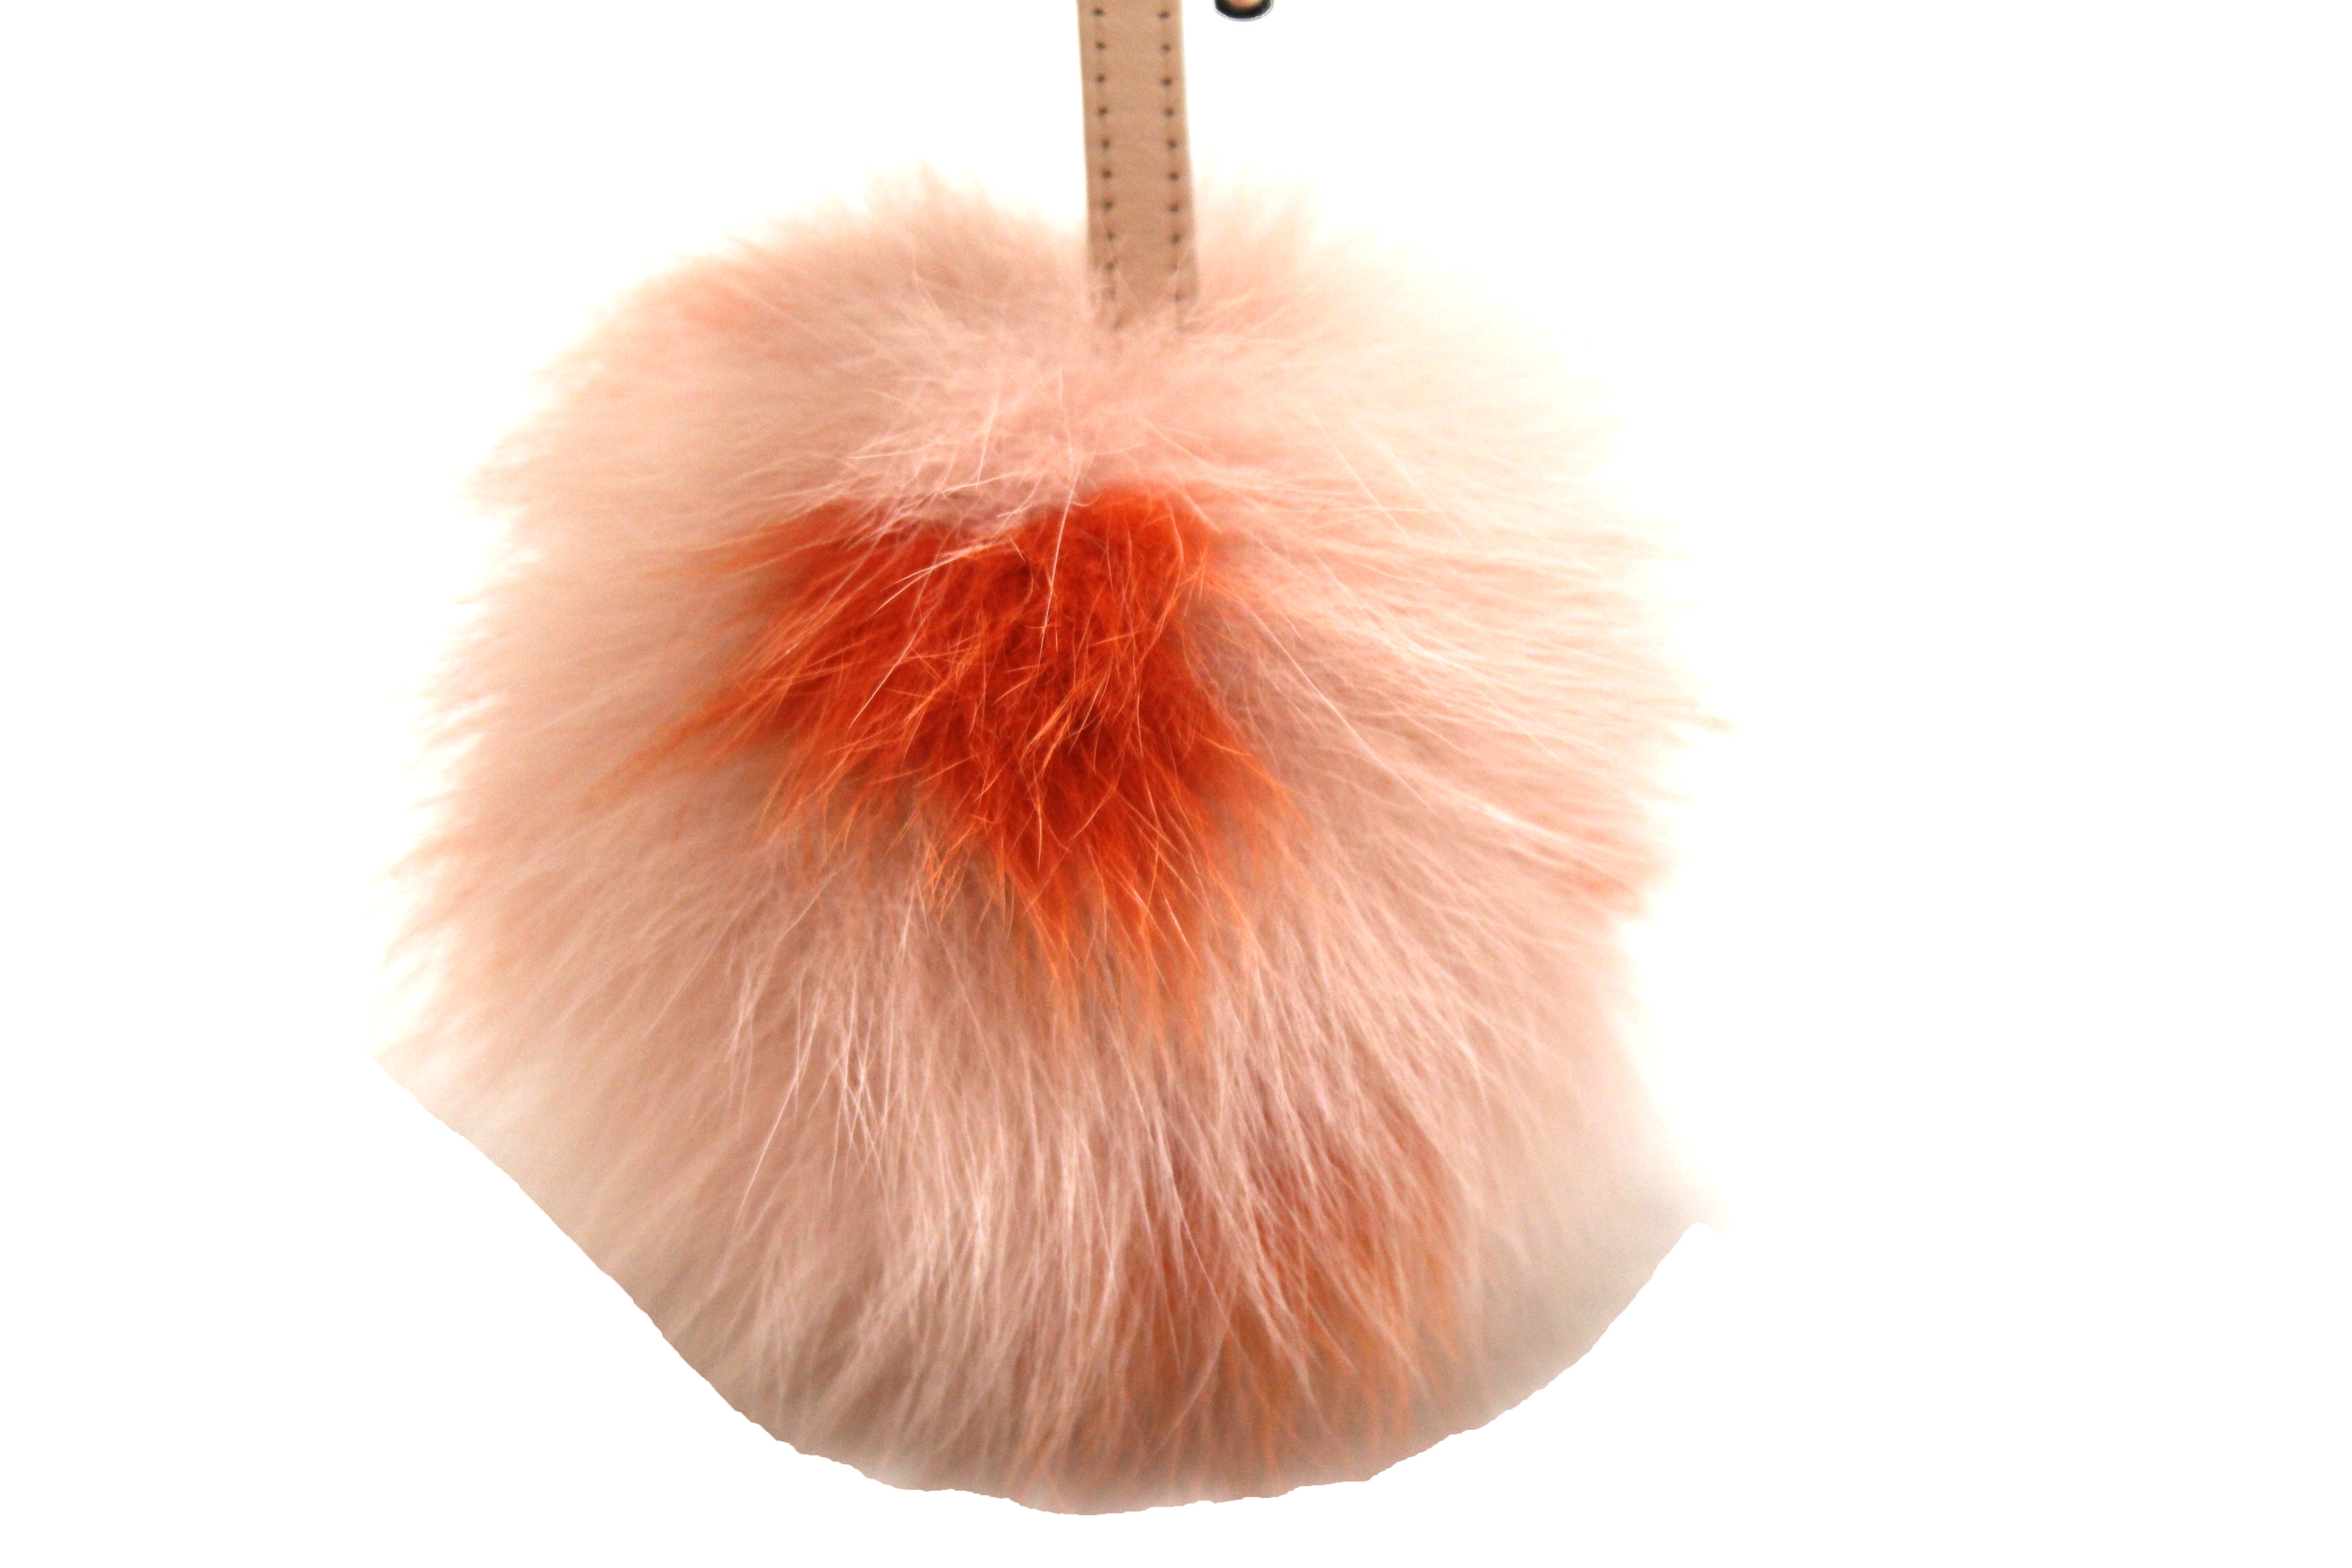 Authentic Fendi Light Pink/Orange Fur Pom-Pom Bag Charm